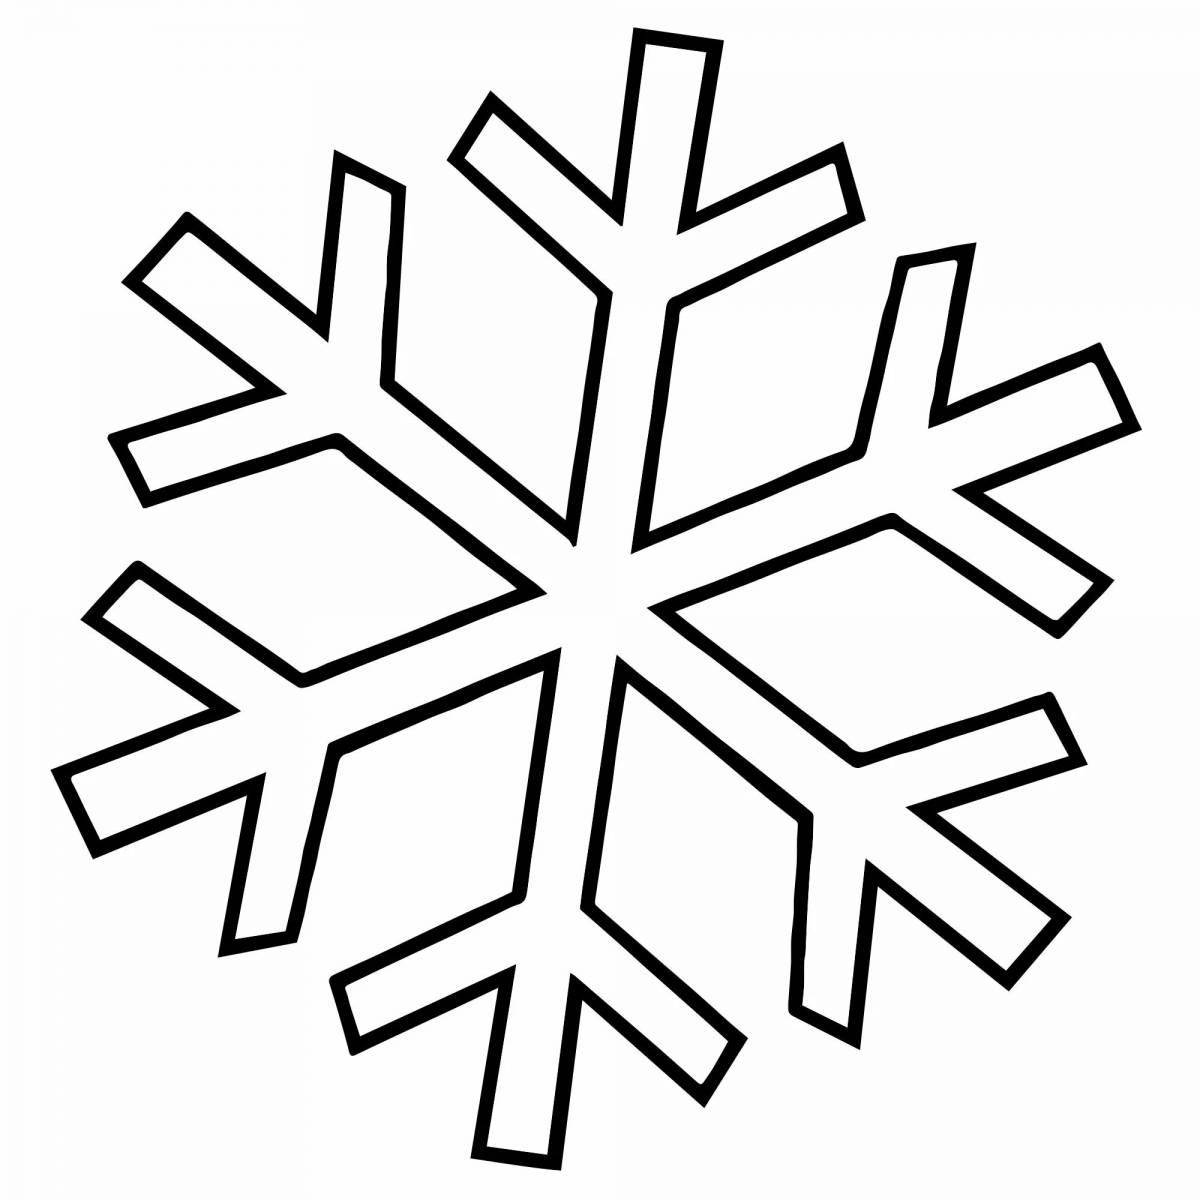 Magic snowflake coloring for children 4-5 years old in kindergarten